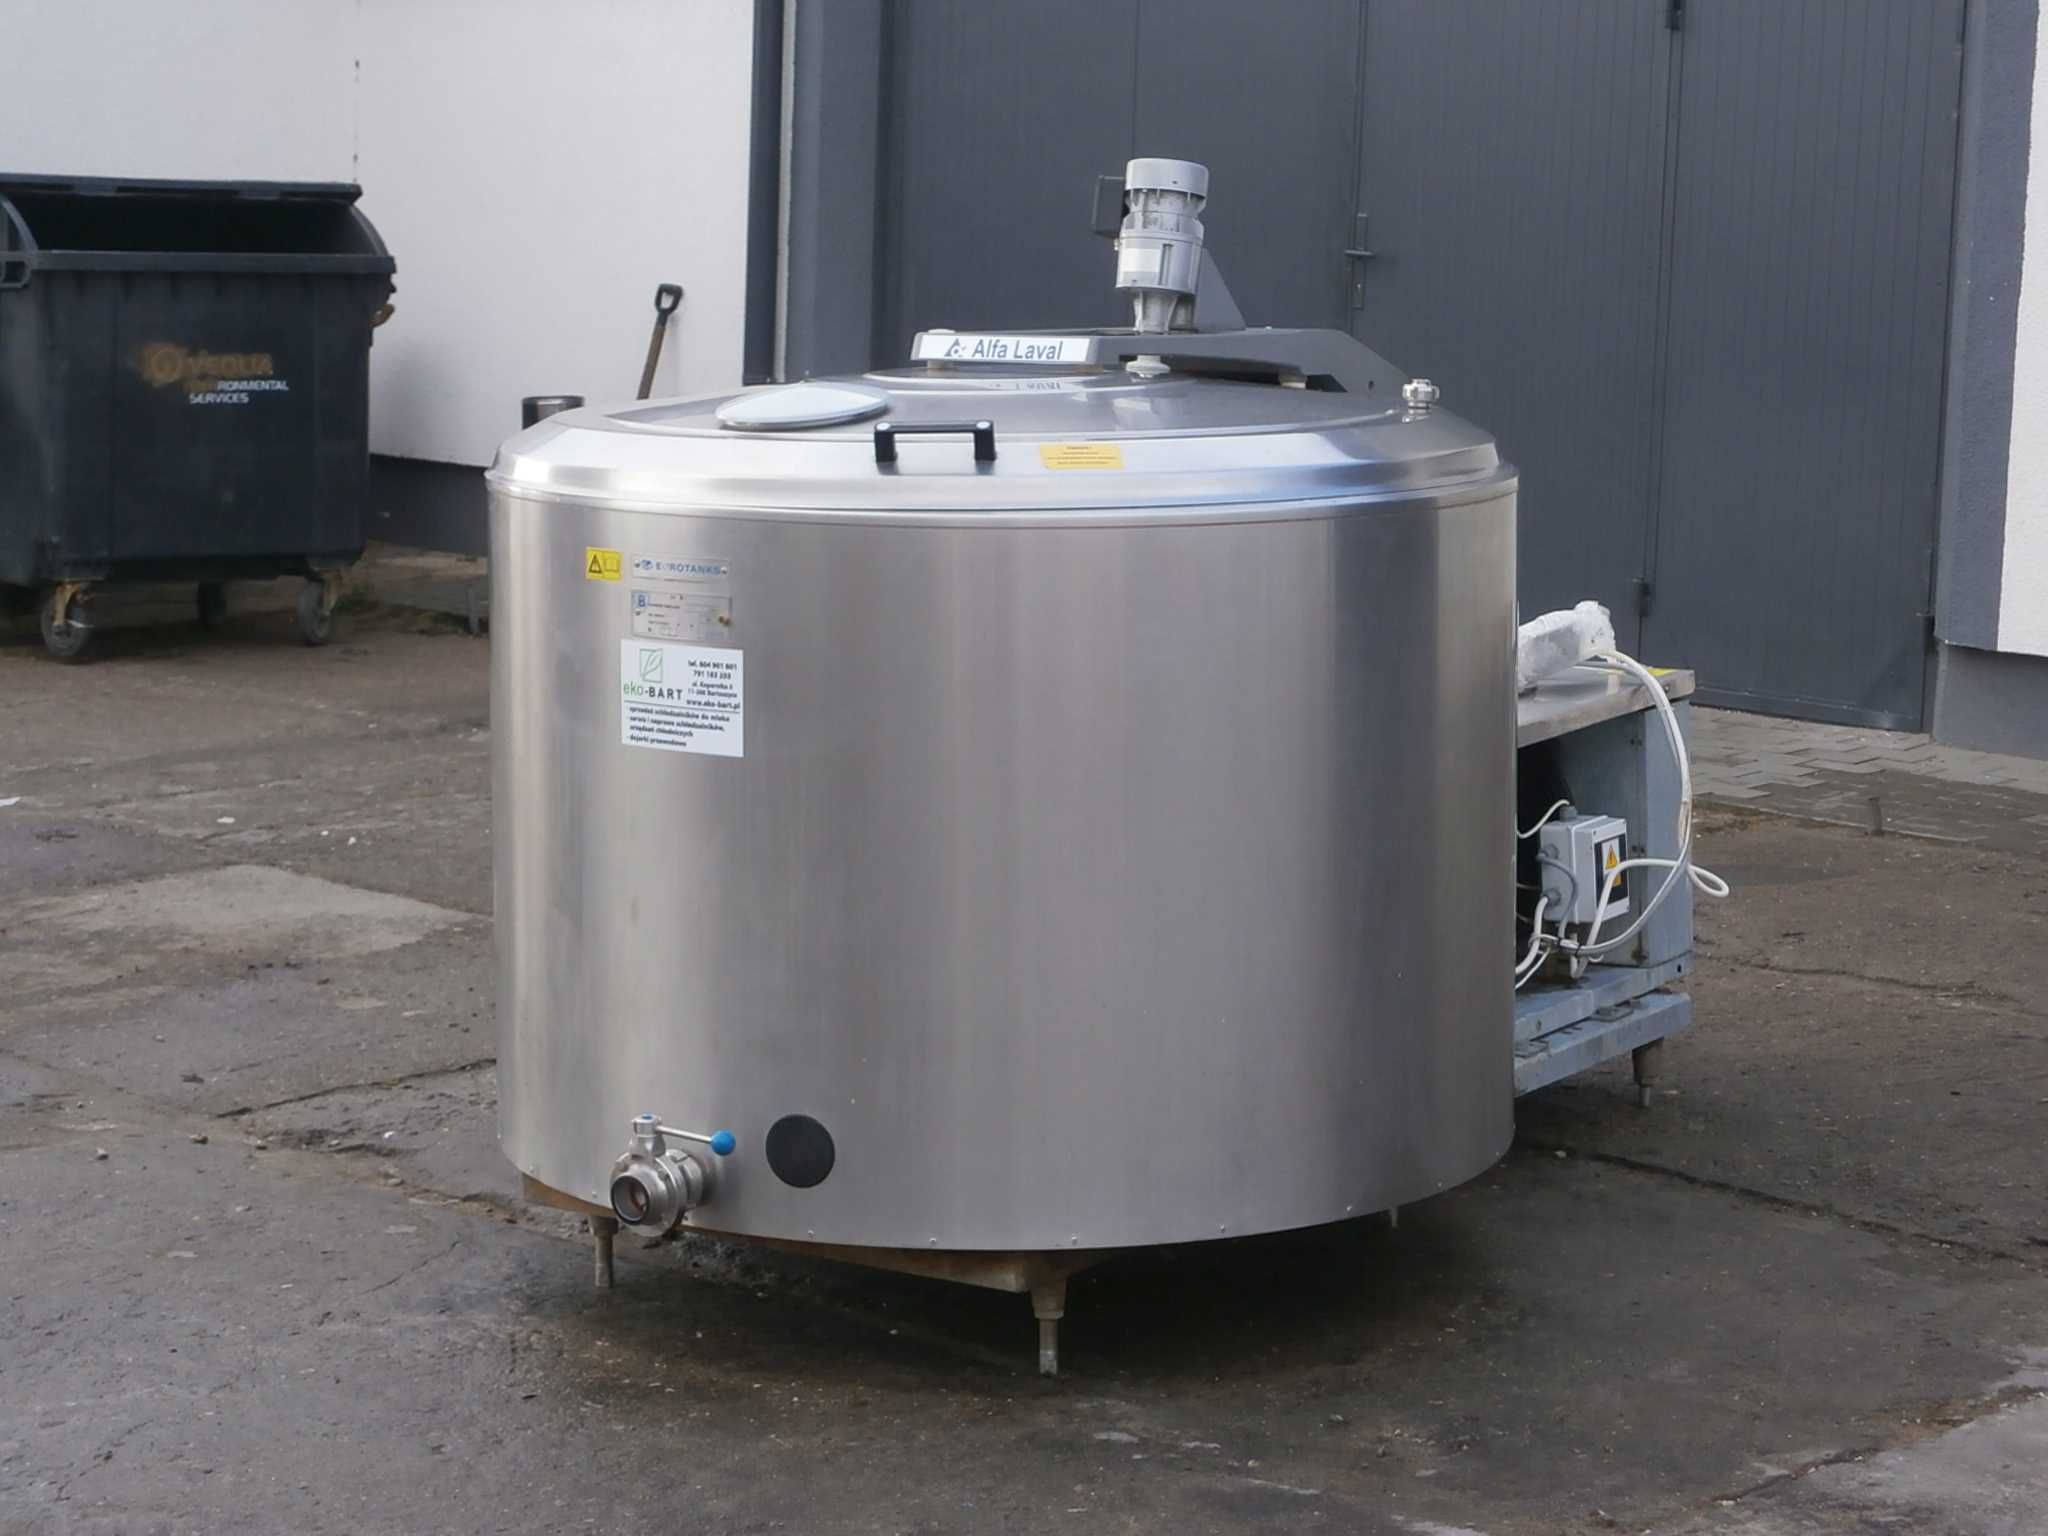 Schładzalnik zbiornik chłodnia do mleka Alfa Laval, RFT 800L IDEALNY